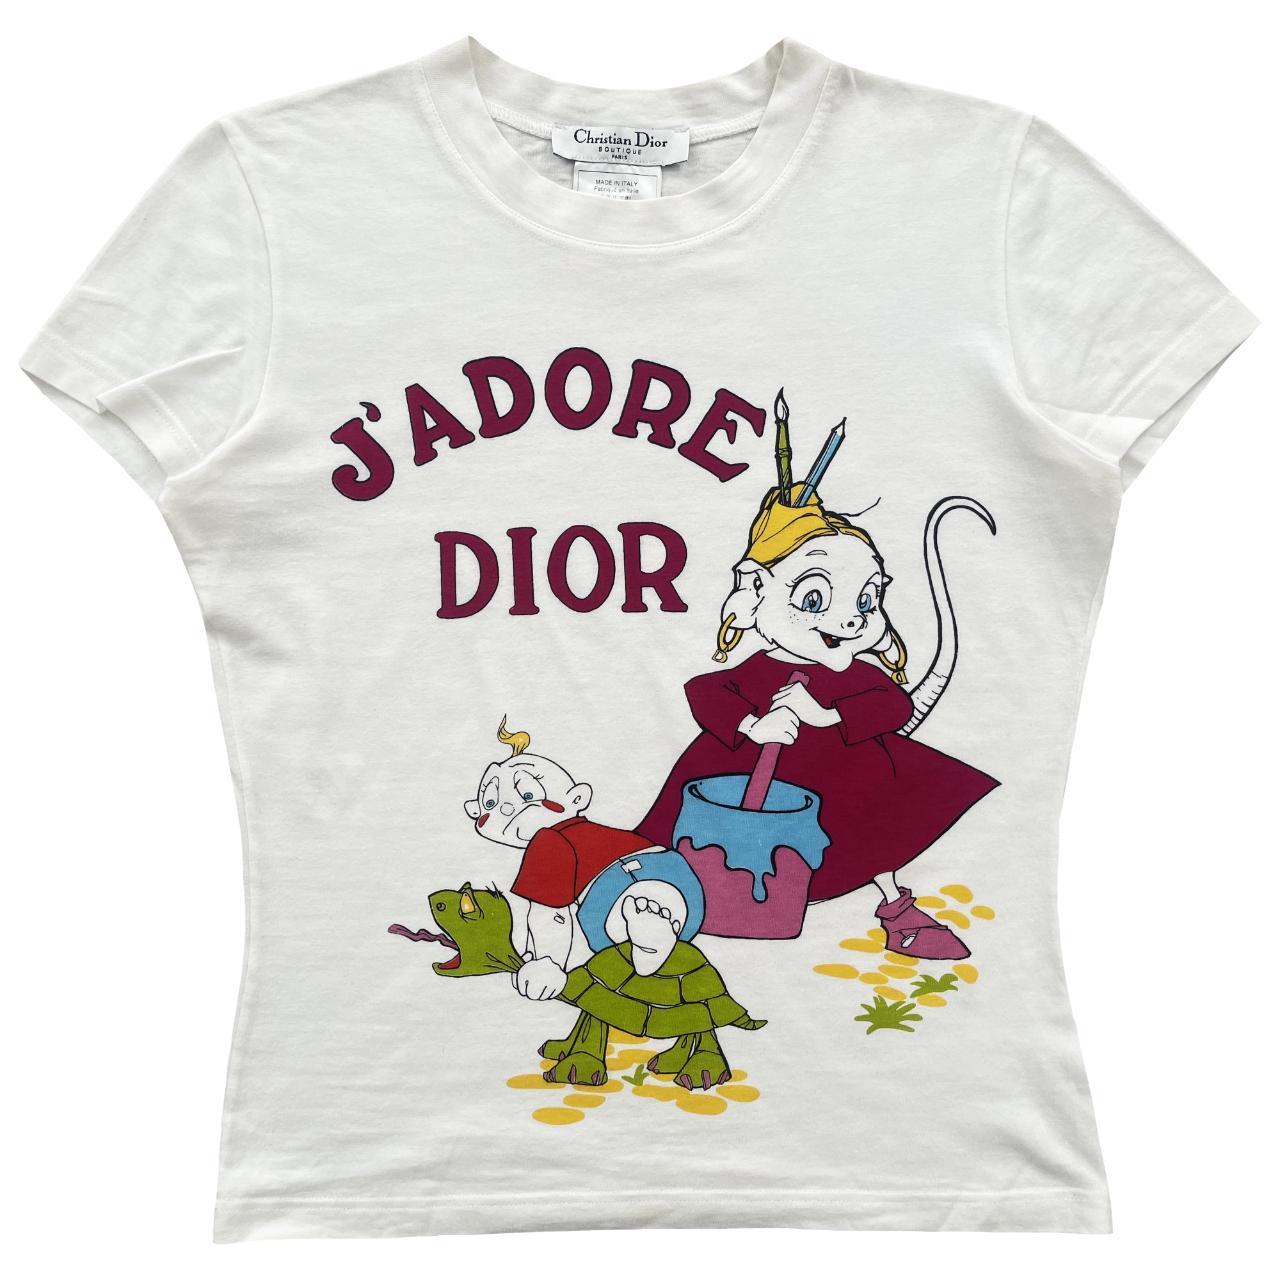 Christian Dior J'adore Dior T-Shirt Summer Holiday...